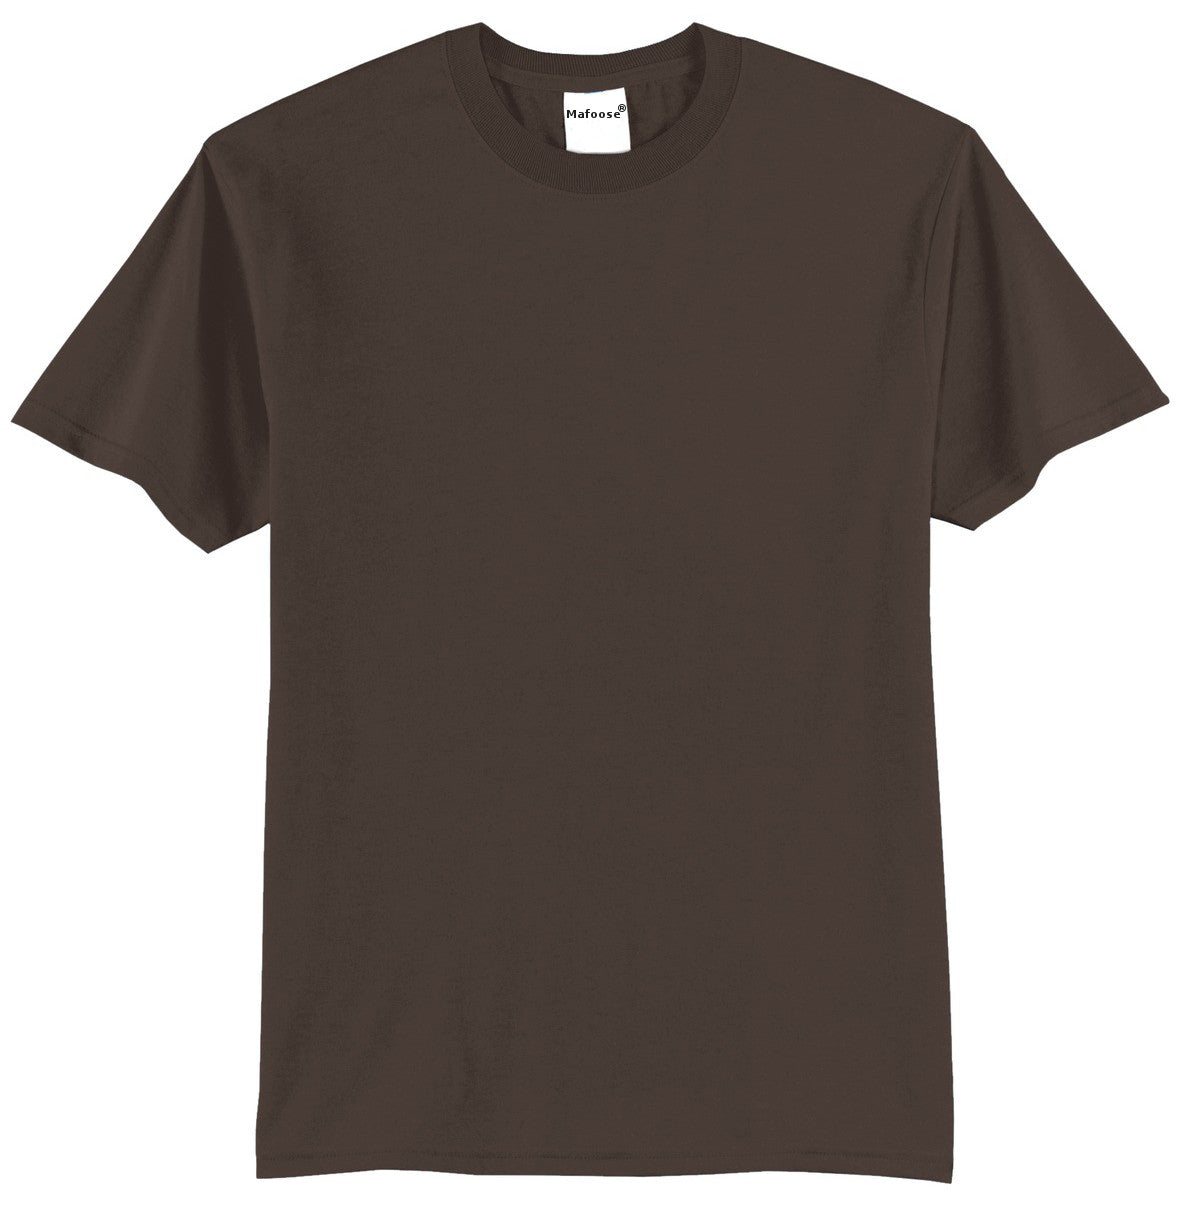 Mafoose Men's Core Blend Tee Shirt Brown